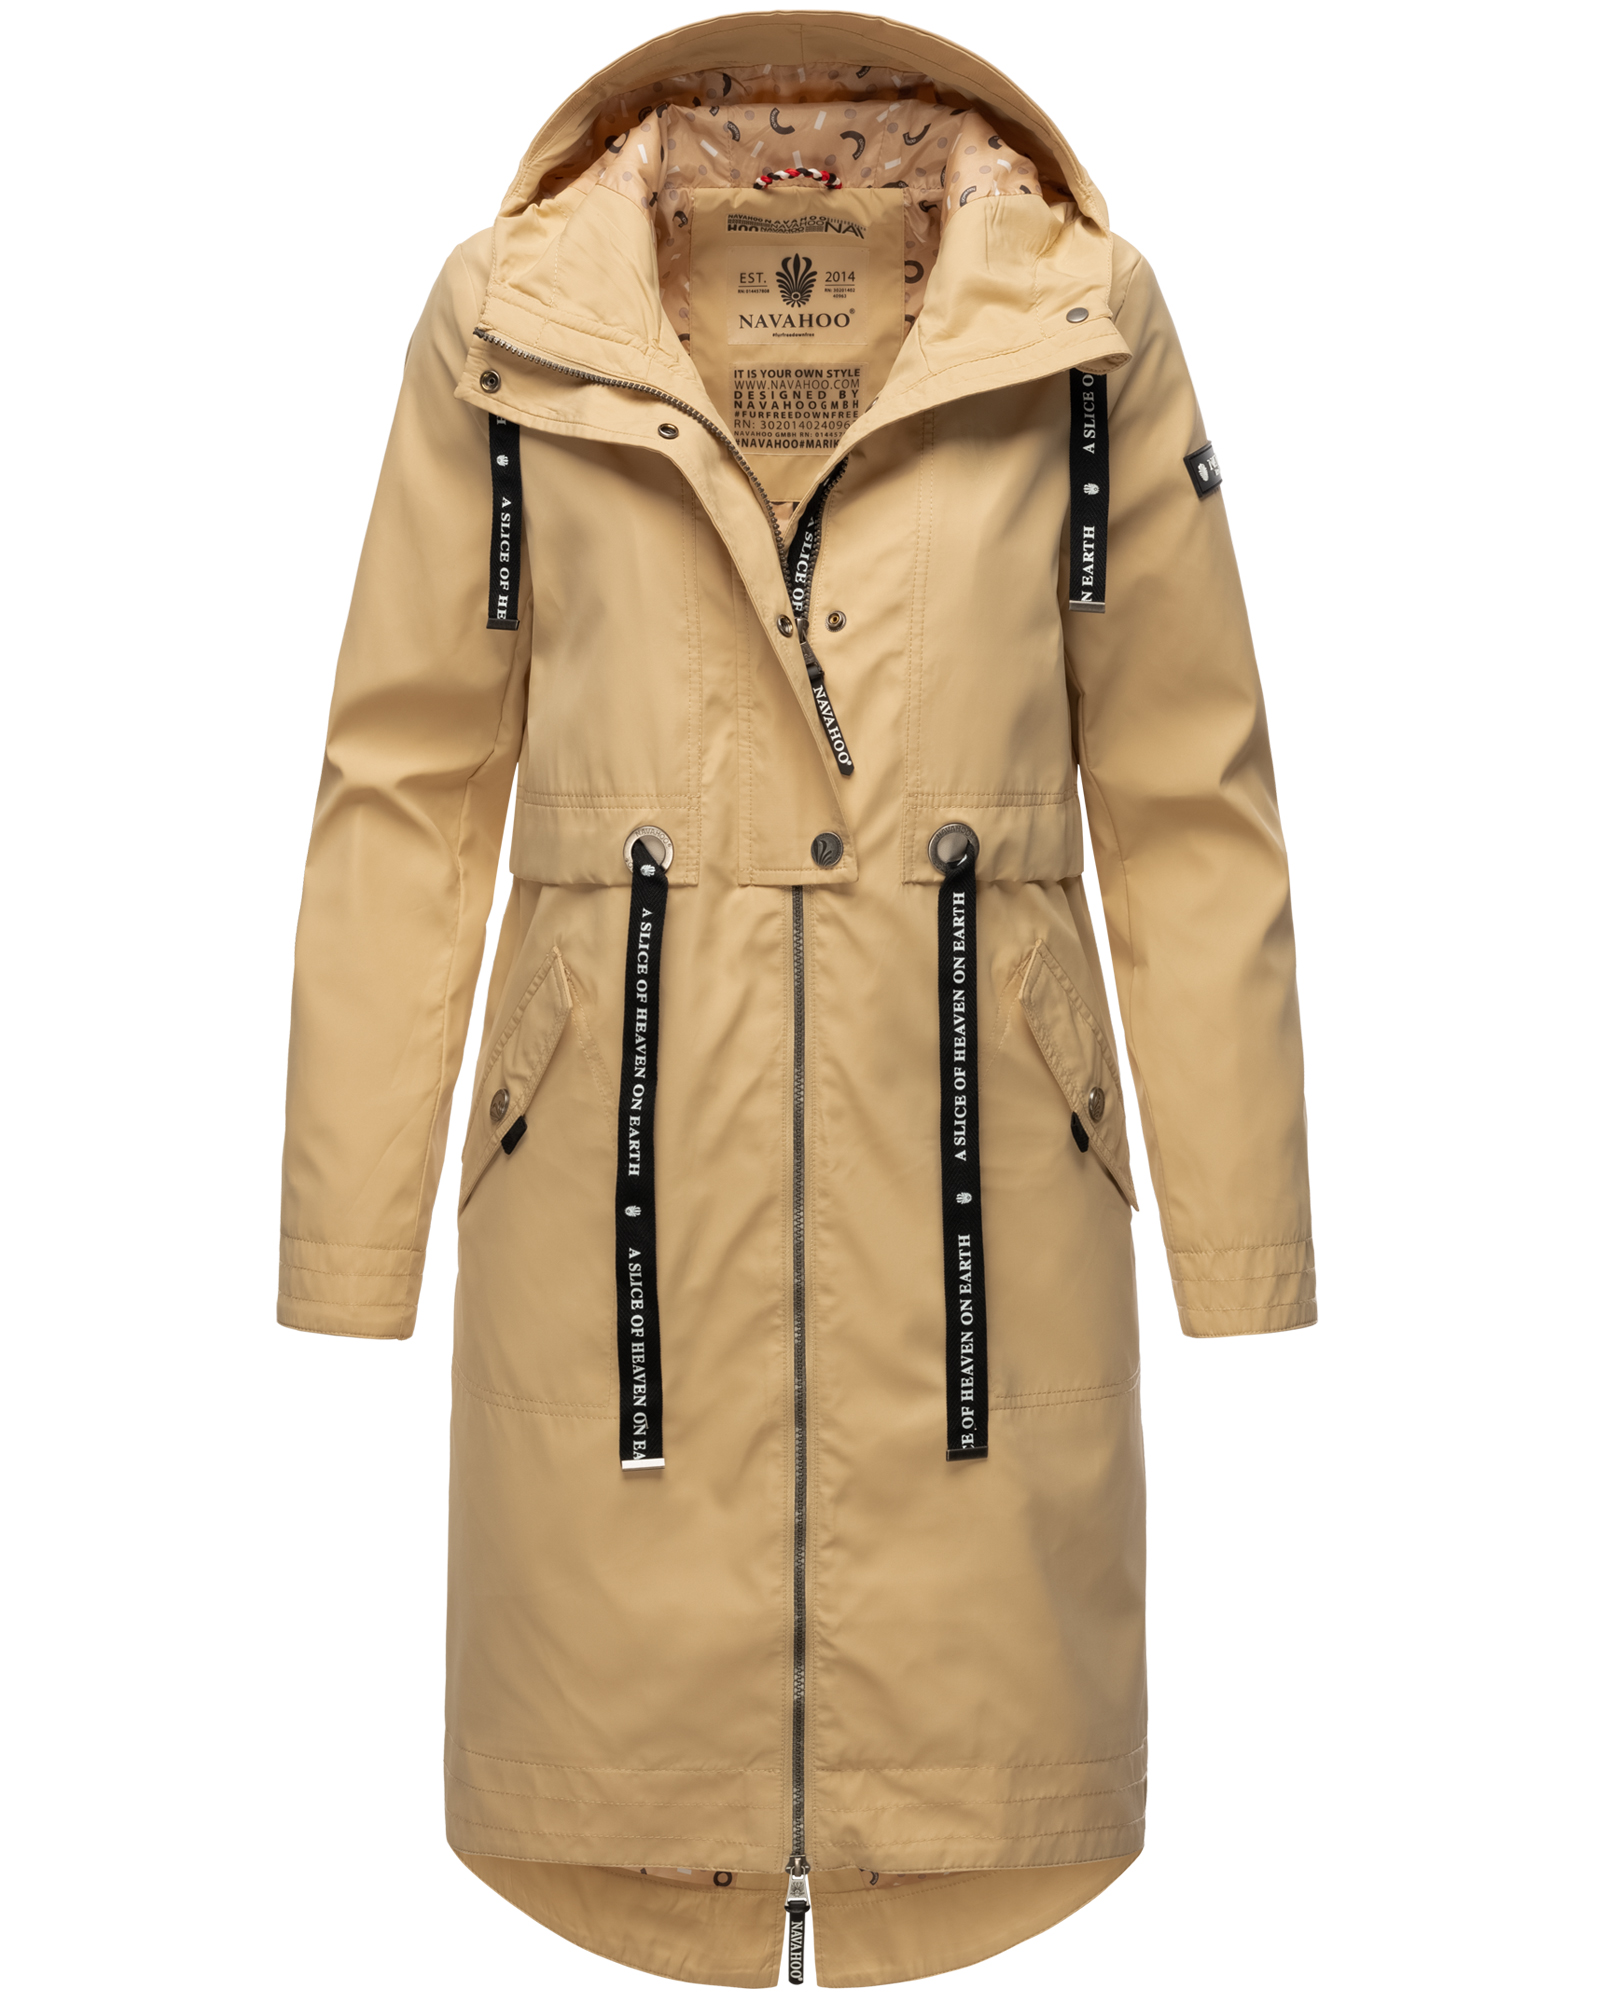 Dámský kabát s kapucí Josinaa Navahoo - BEIGE Velikost: 3XL